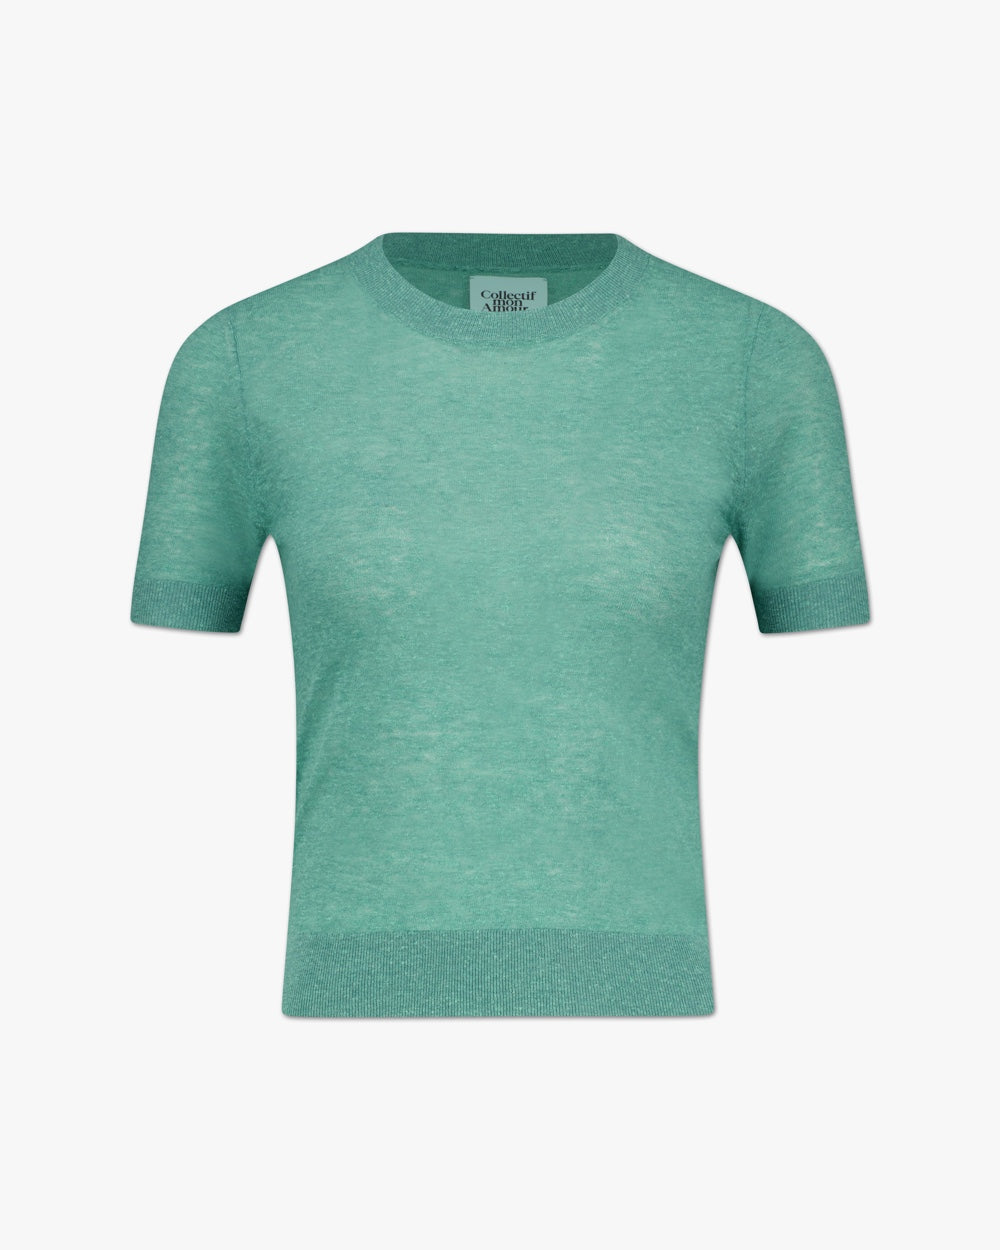 Bea | T-Shirt | Hanf, Supima-Cotton